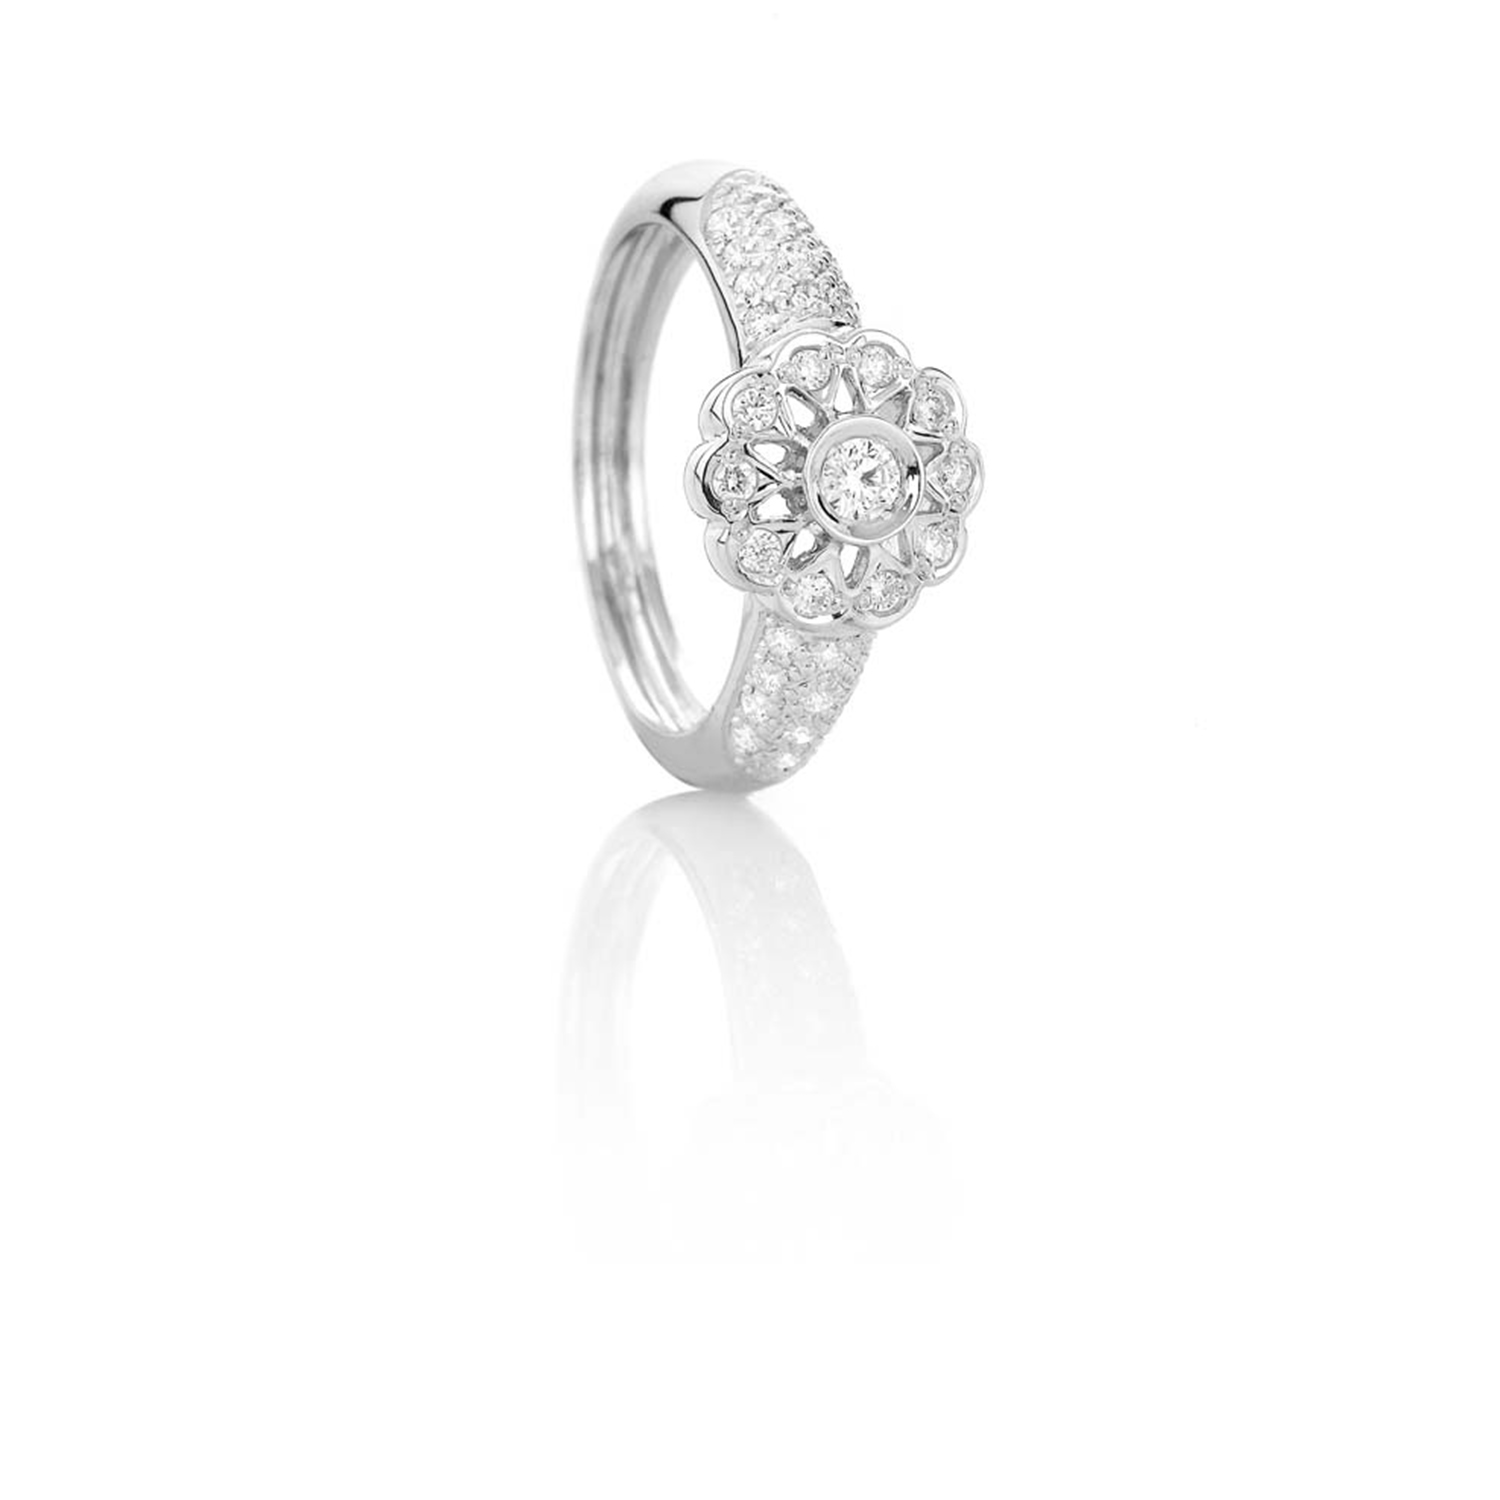 Sensi joyas jewellery Granada silver engagement8K WHITE GOLD RING  0,50CT OF DIAMONDS.